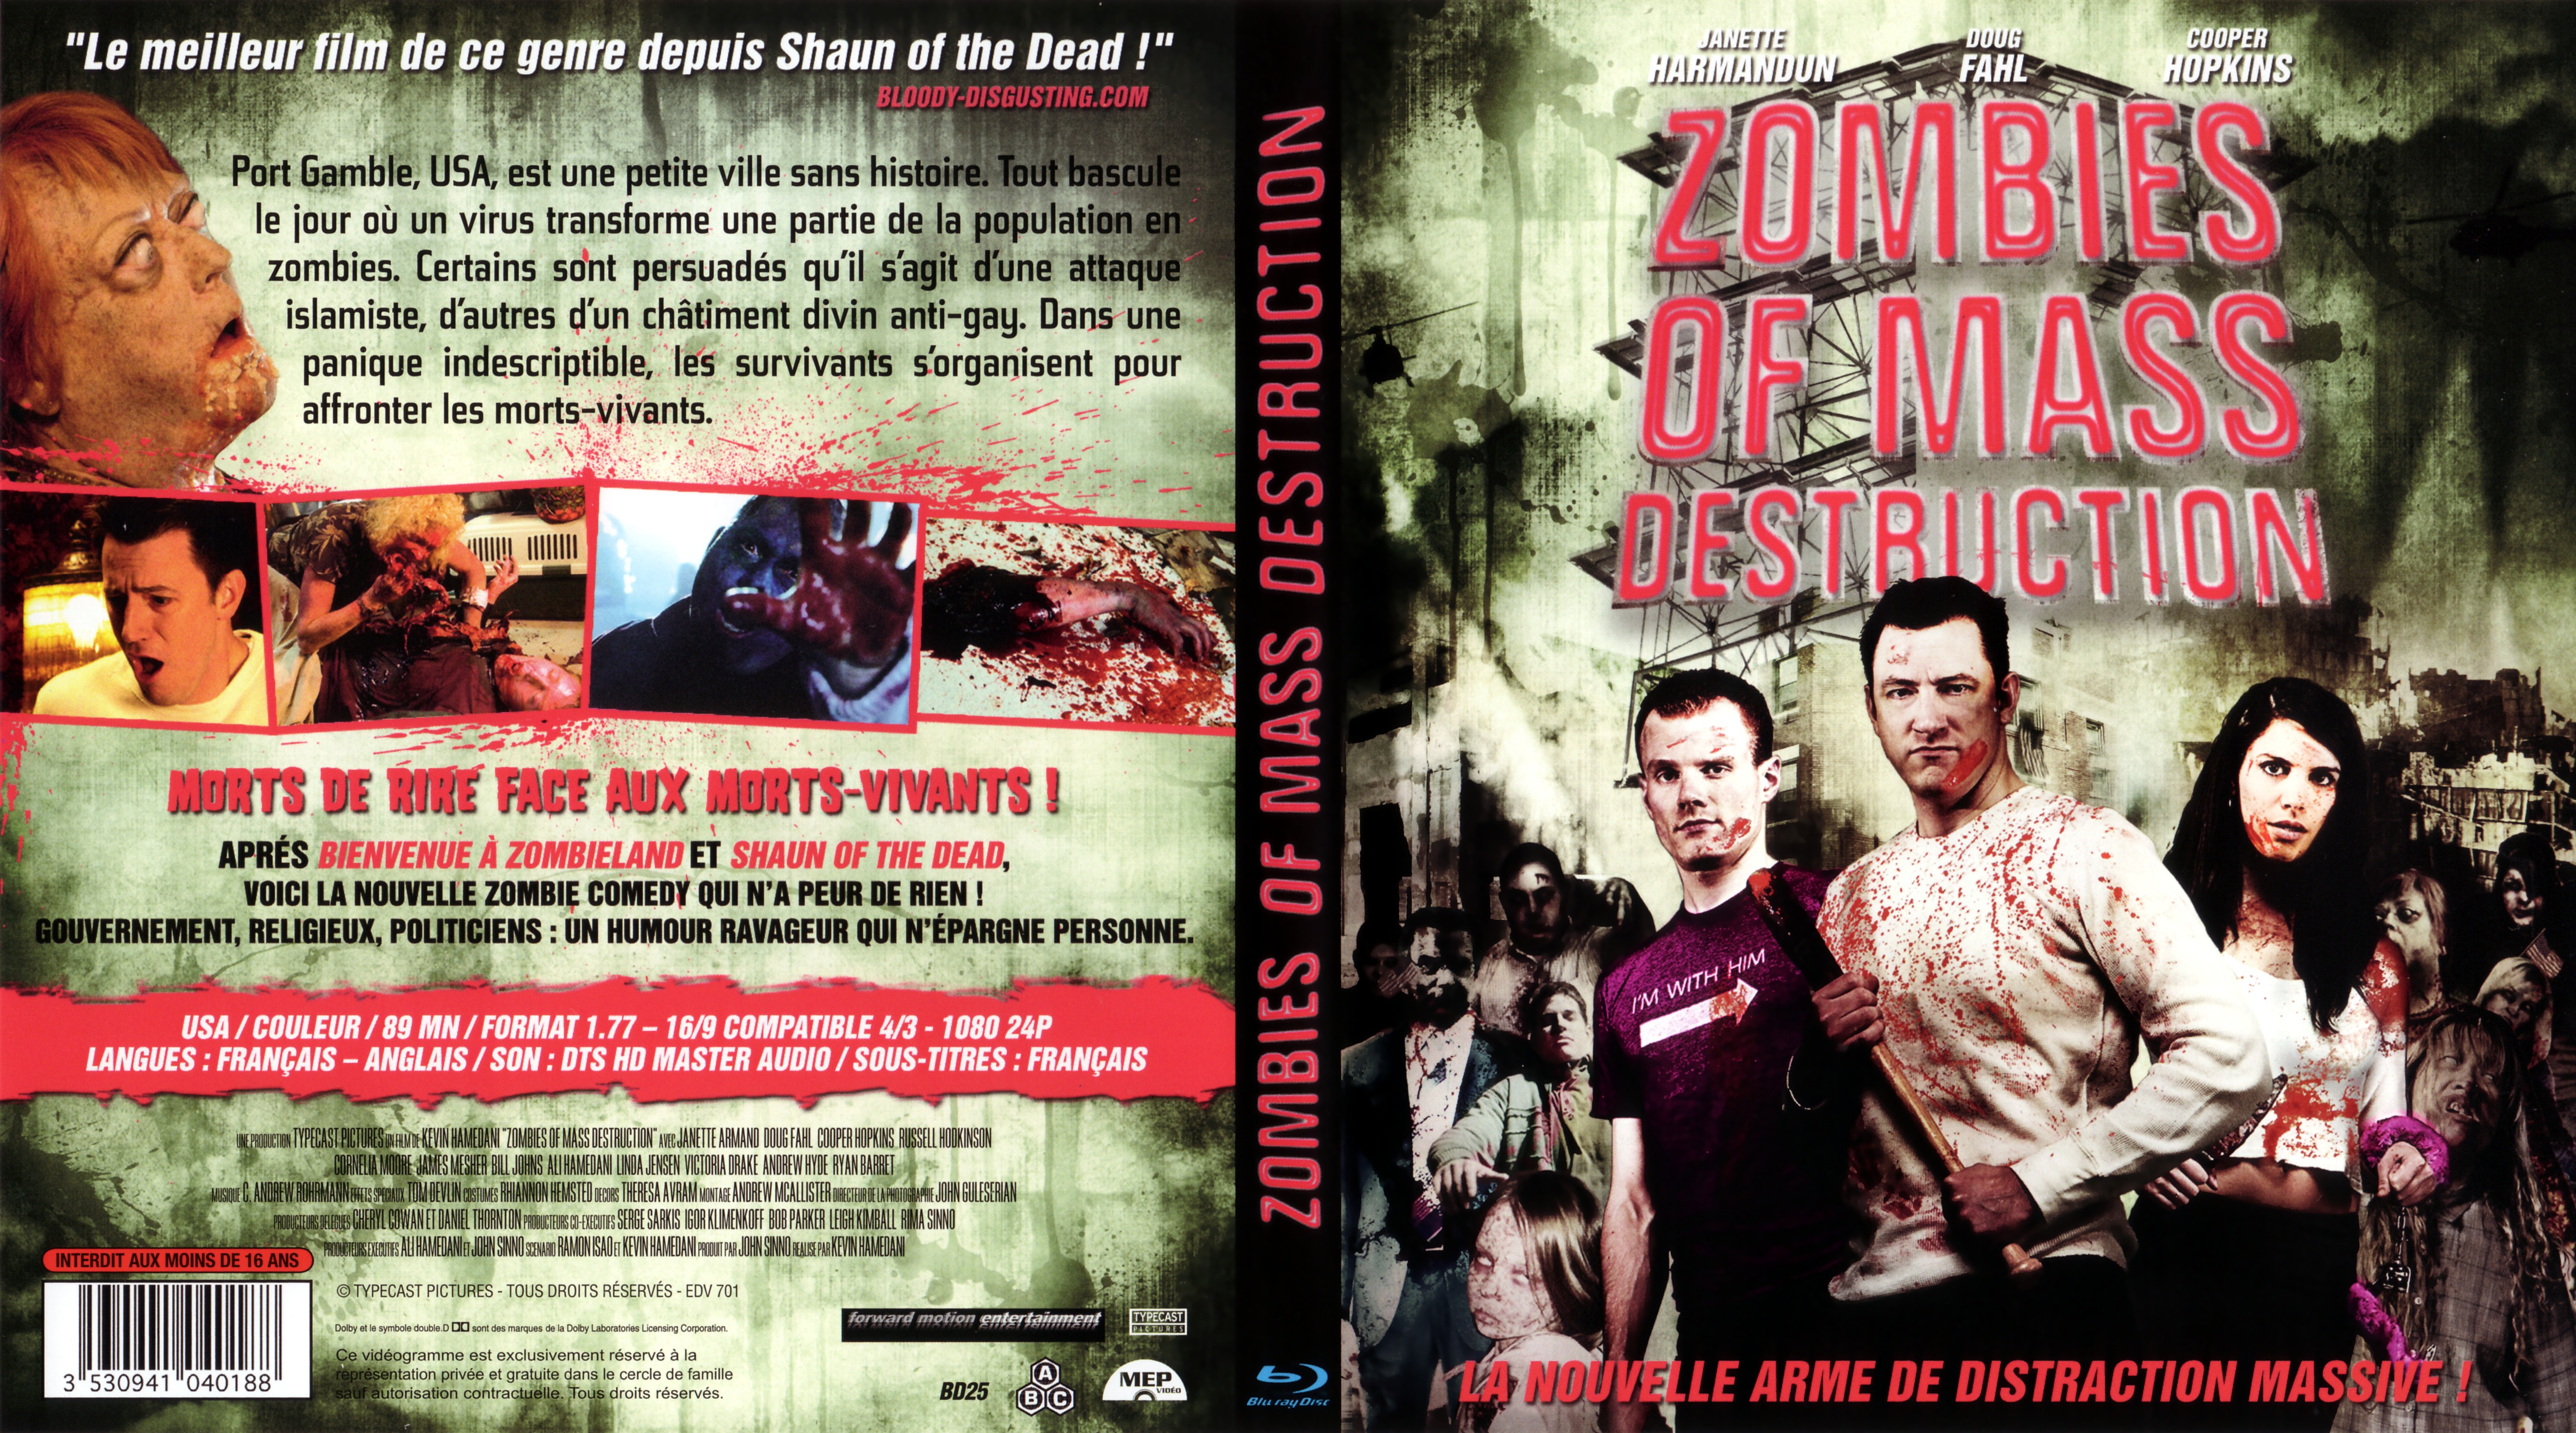 Jaquette DVD Zombies of mass destruction (BLU-RAY)